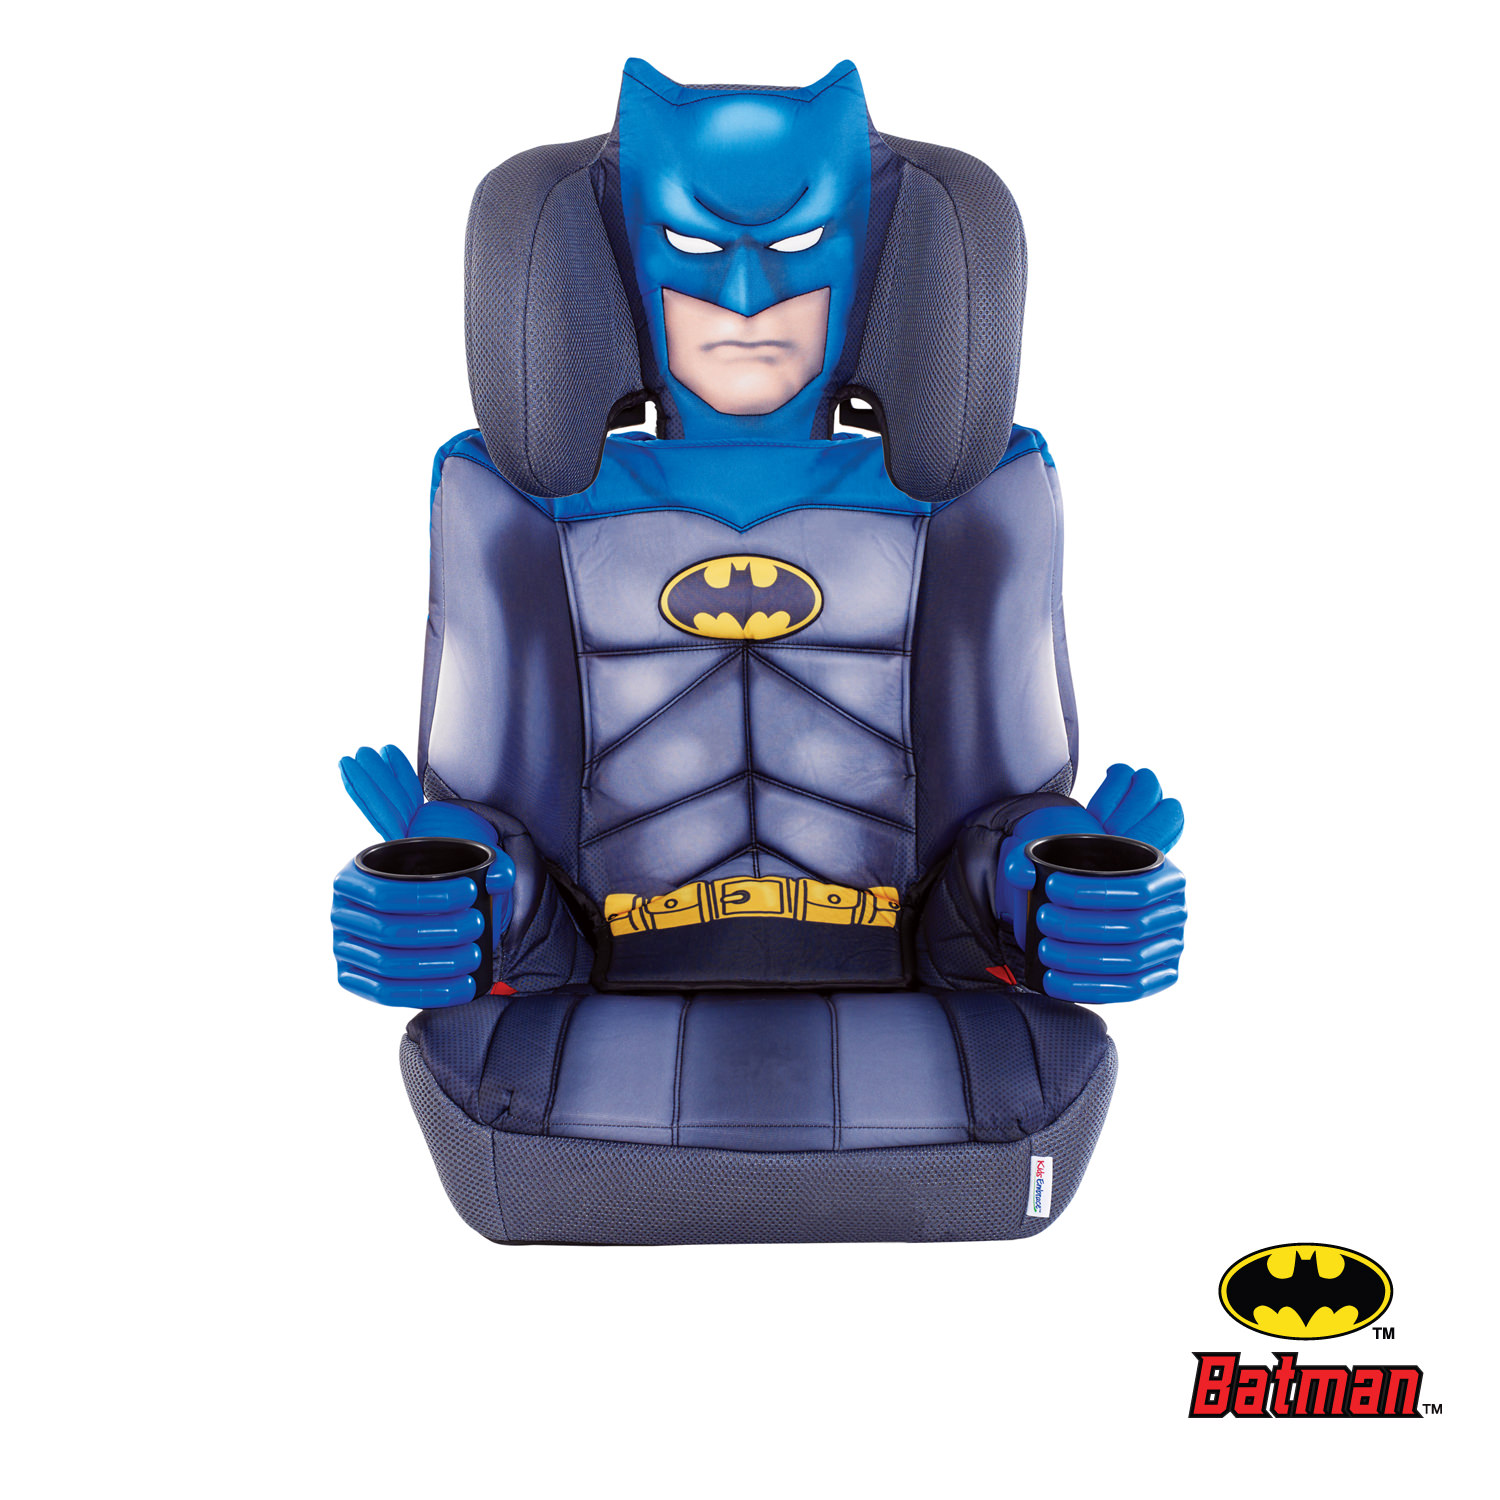 Batman Superman Seat Belt Covers Child Seat Superheroes Highchair Stroller Pram 